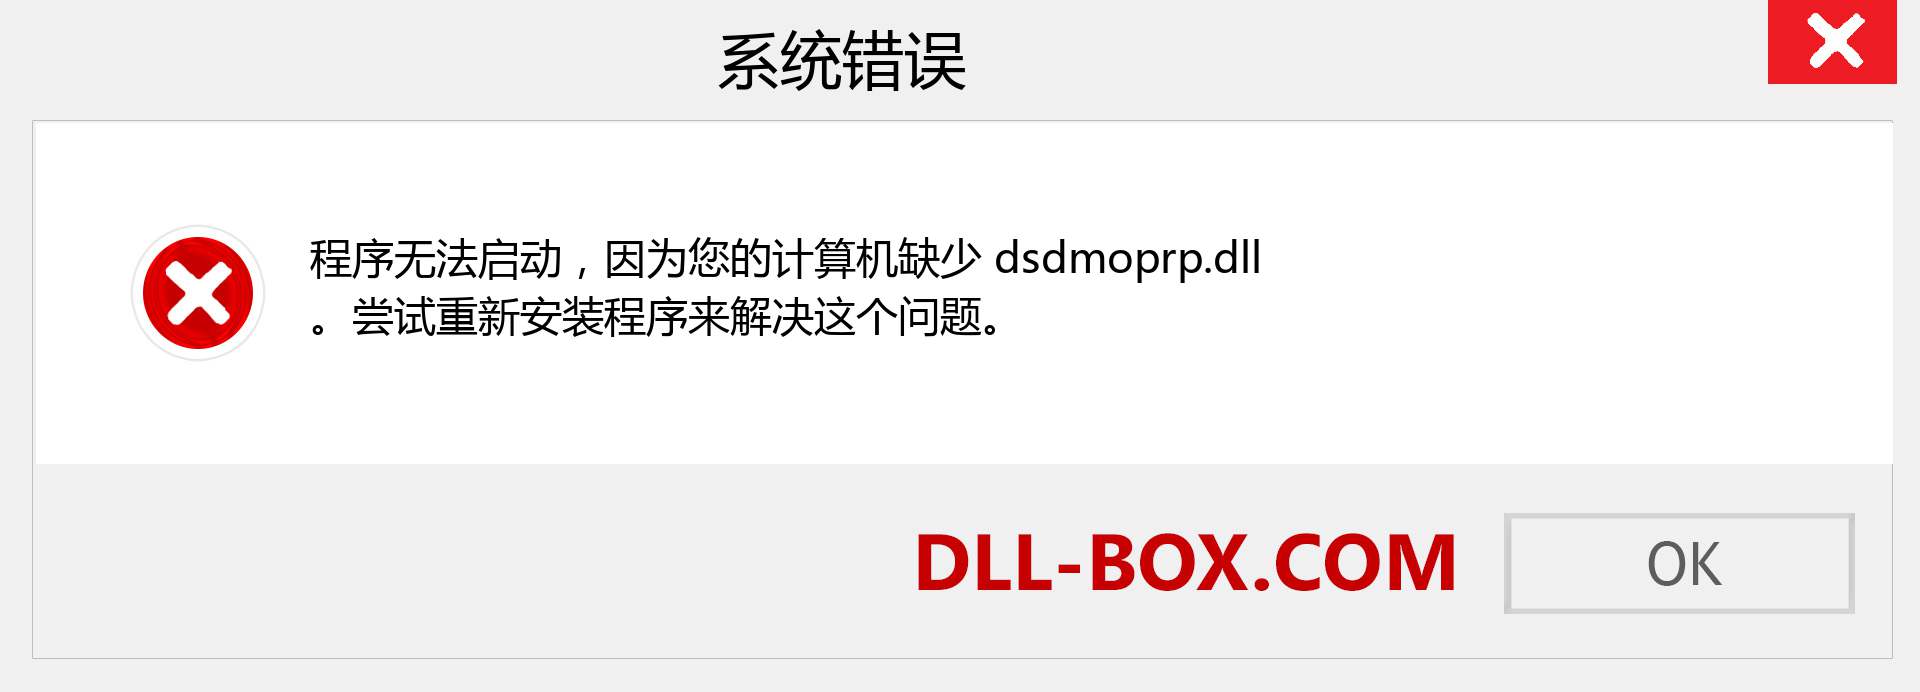 dsdmoprp.dll 文件丢失？。 适用于 Windows 7、8、10 的下载 - 修复 Windows、照片、图像上的 dsdmoprp dll 丢失错误